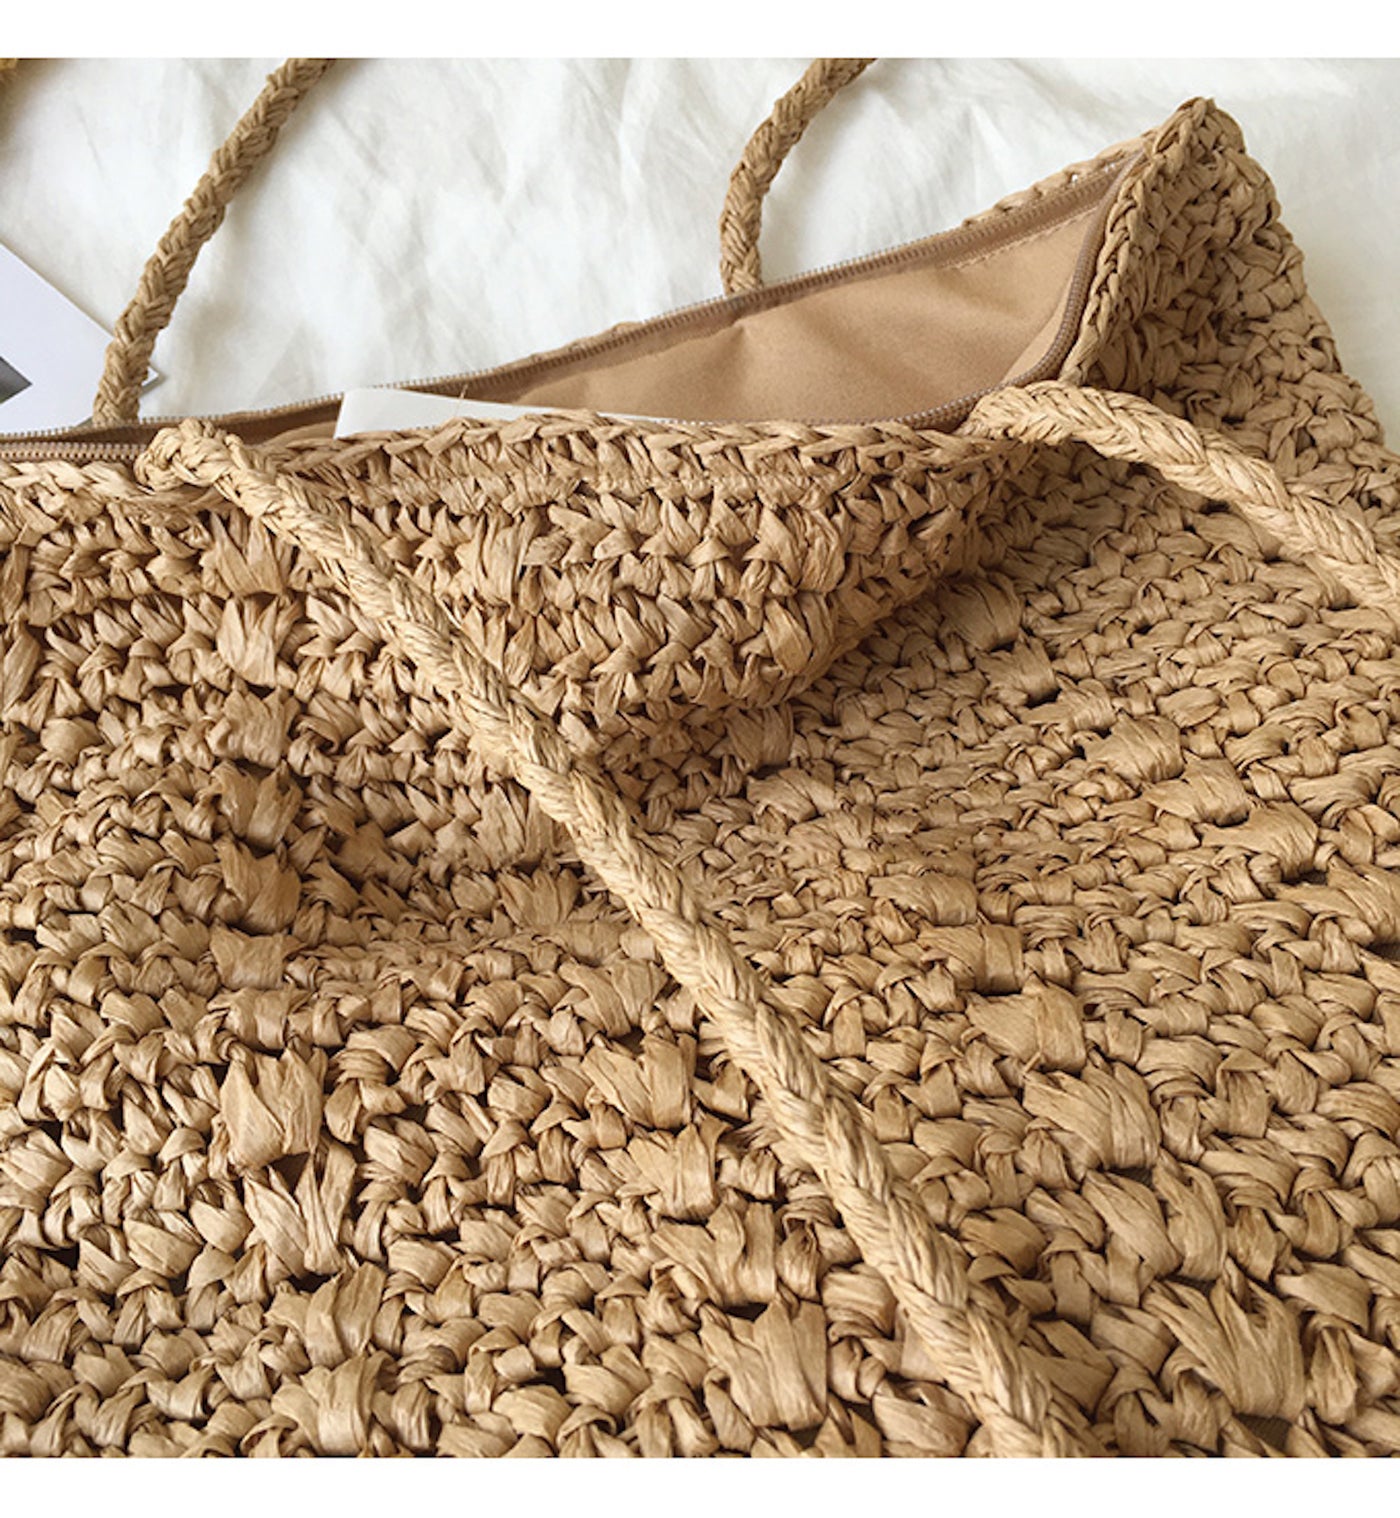 Brown Bag Summer Straw Bag Simple Tote Bag Fashion Bag